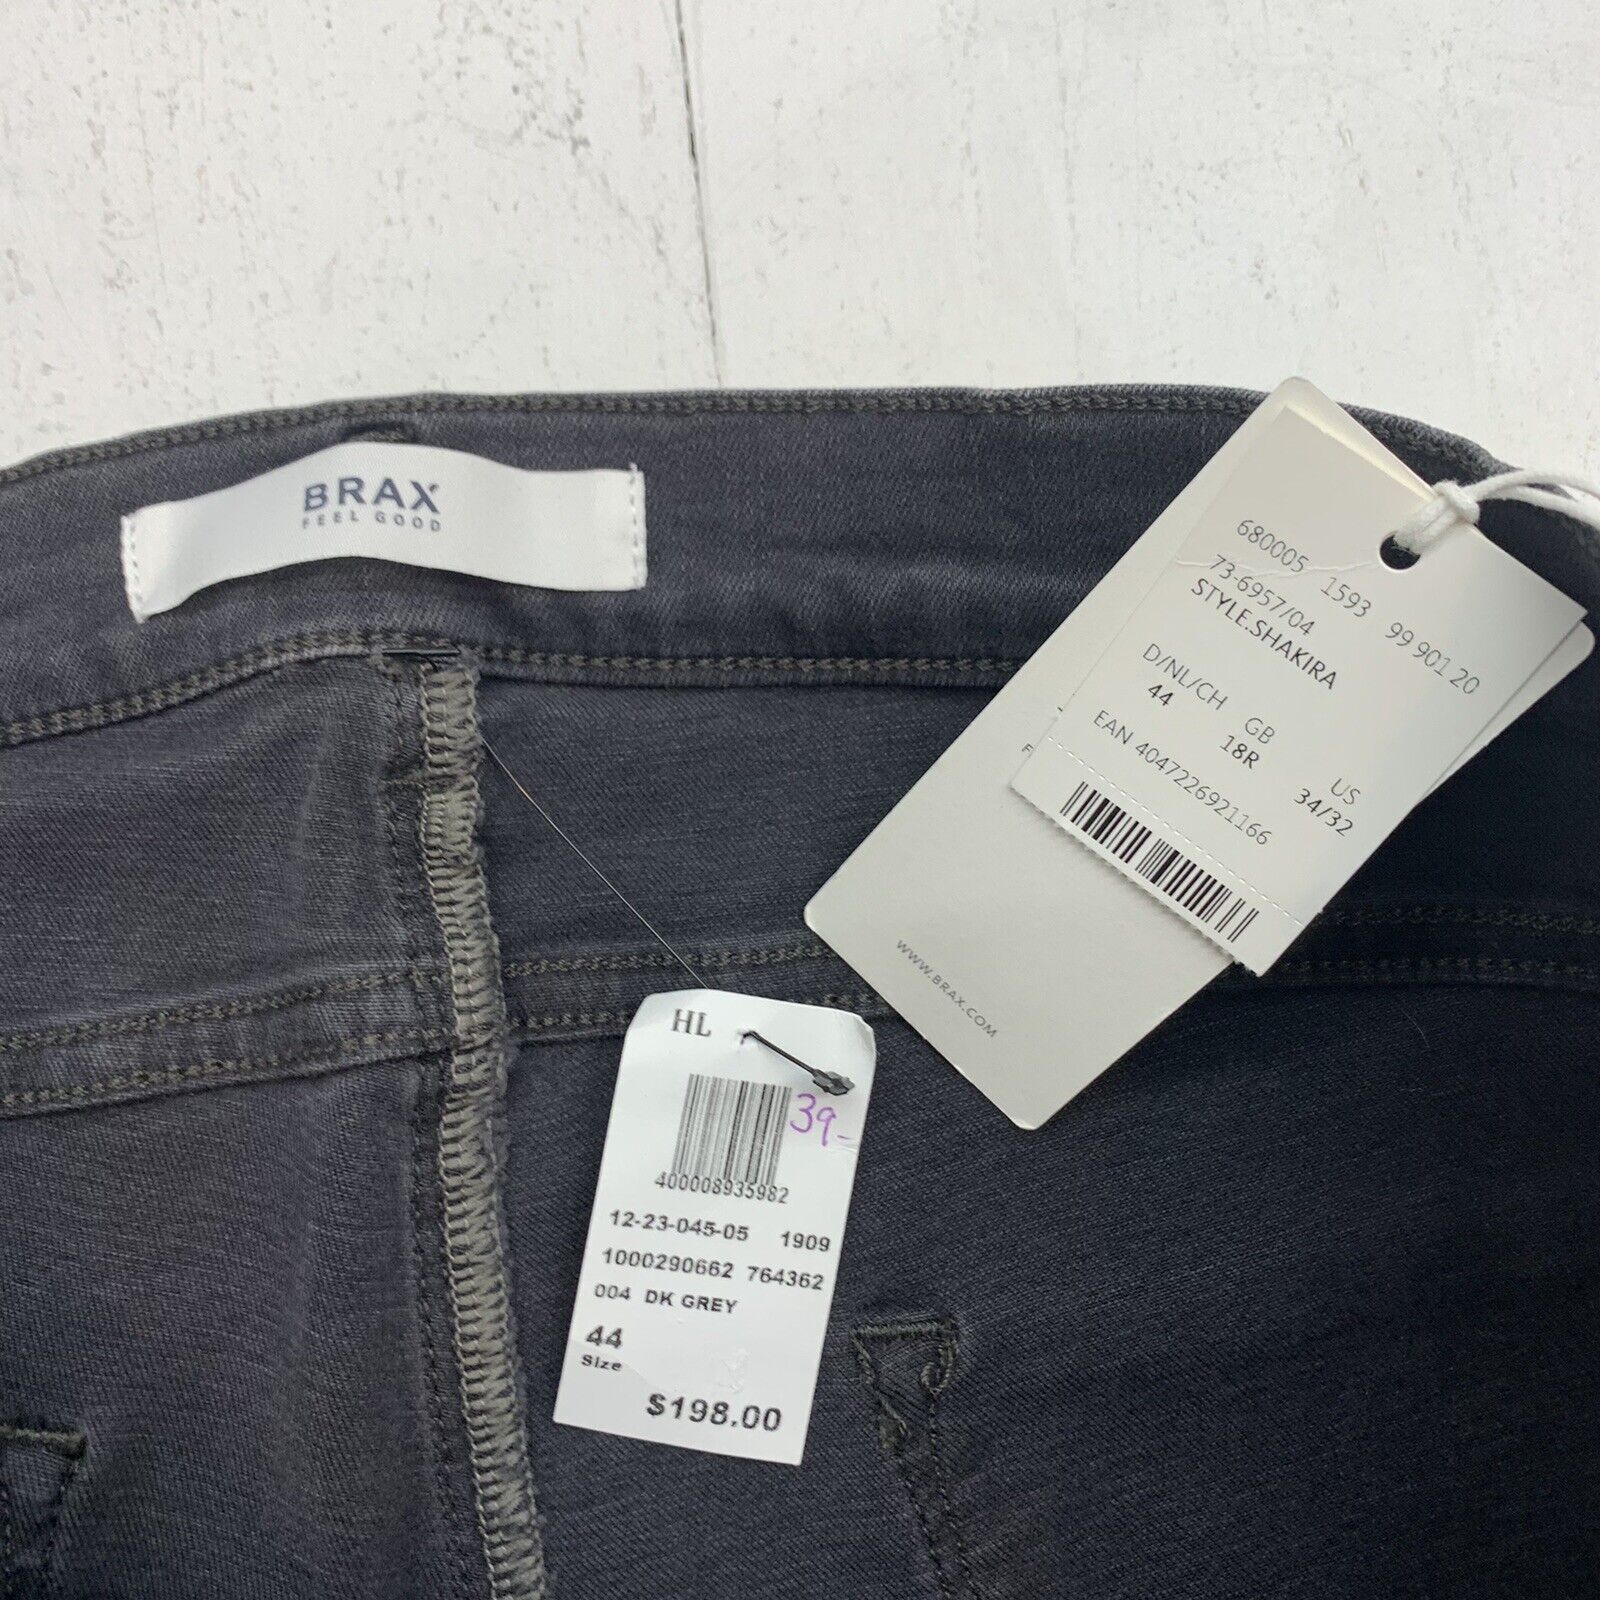 Brax Womens Shakira Skinny jeans size 34/32 - beyond exchange